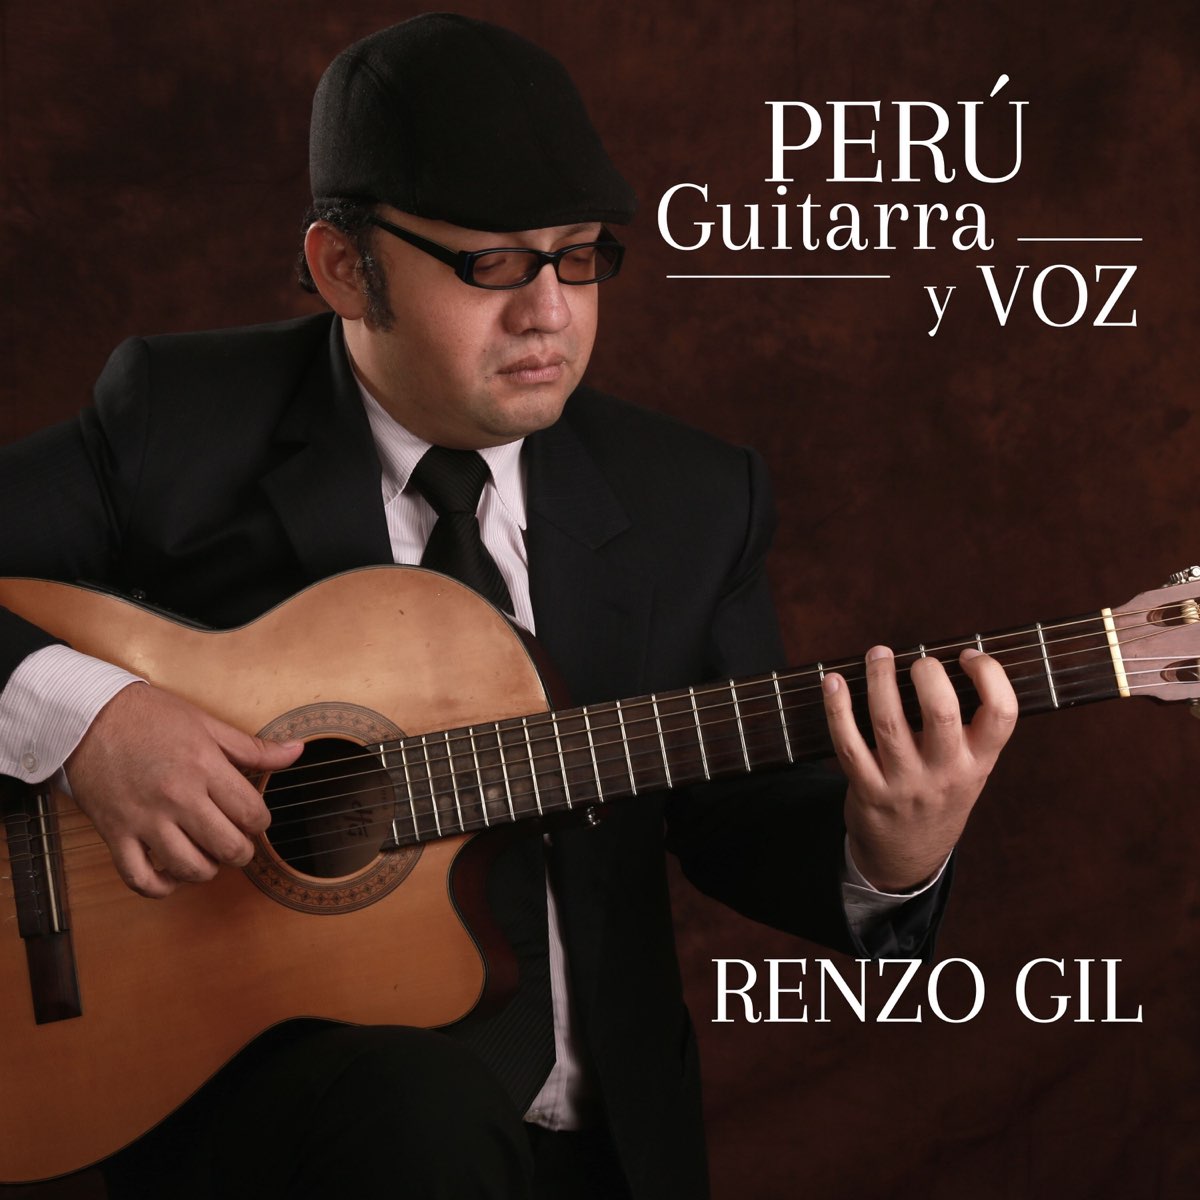 Perú, Guitarra y Voz - EP by Renzo Gil on Apple Music